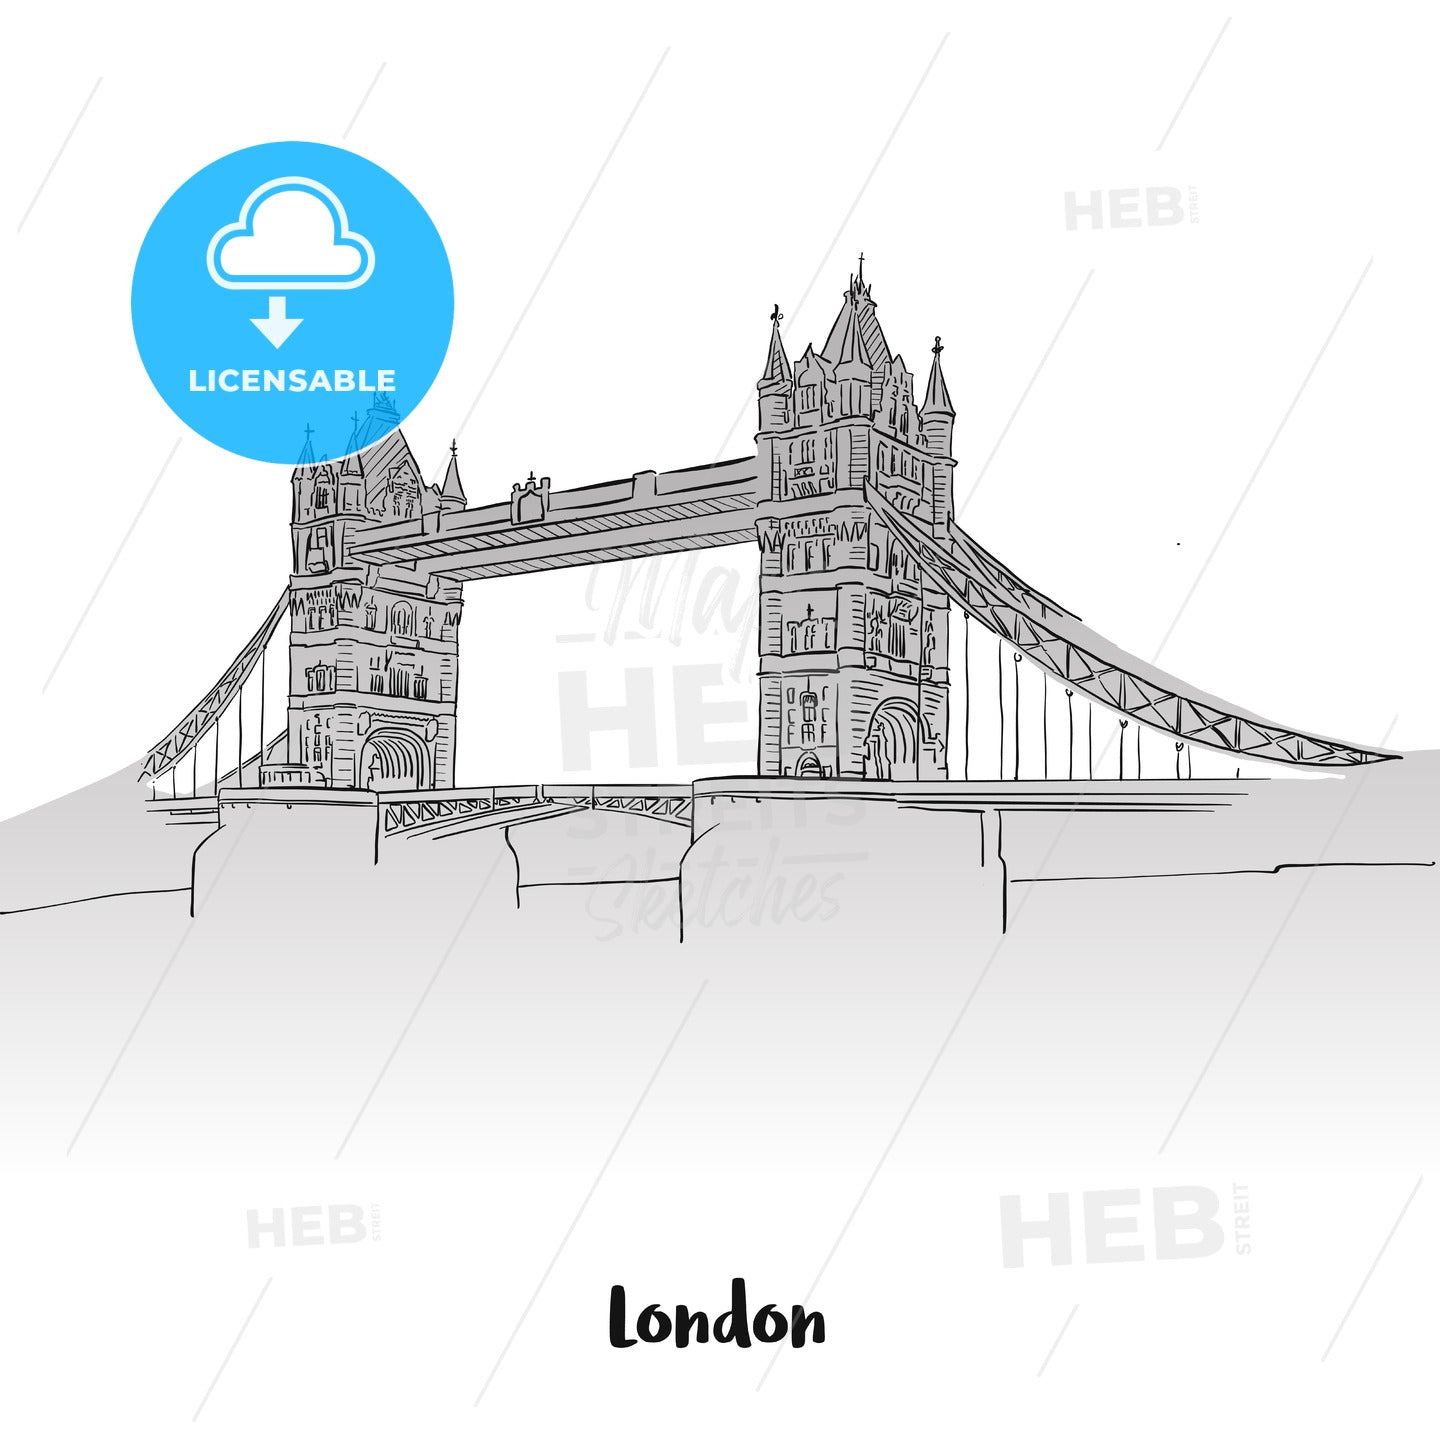 London Tower Bridge Greeting Card – instant download